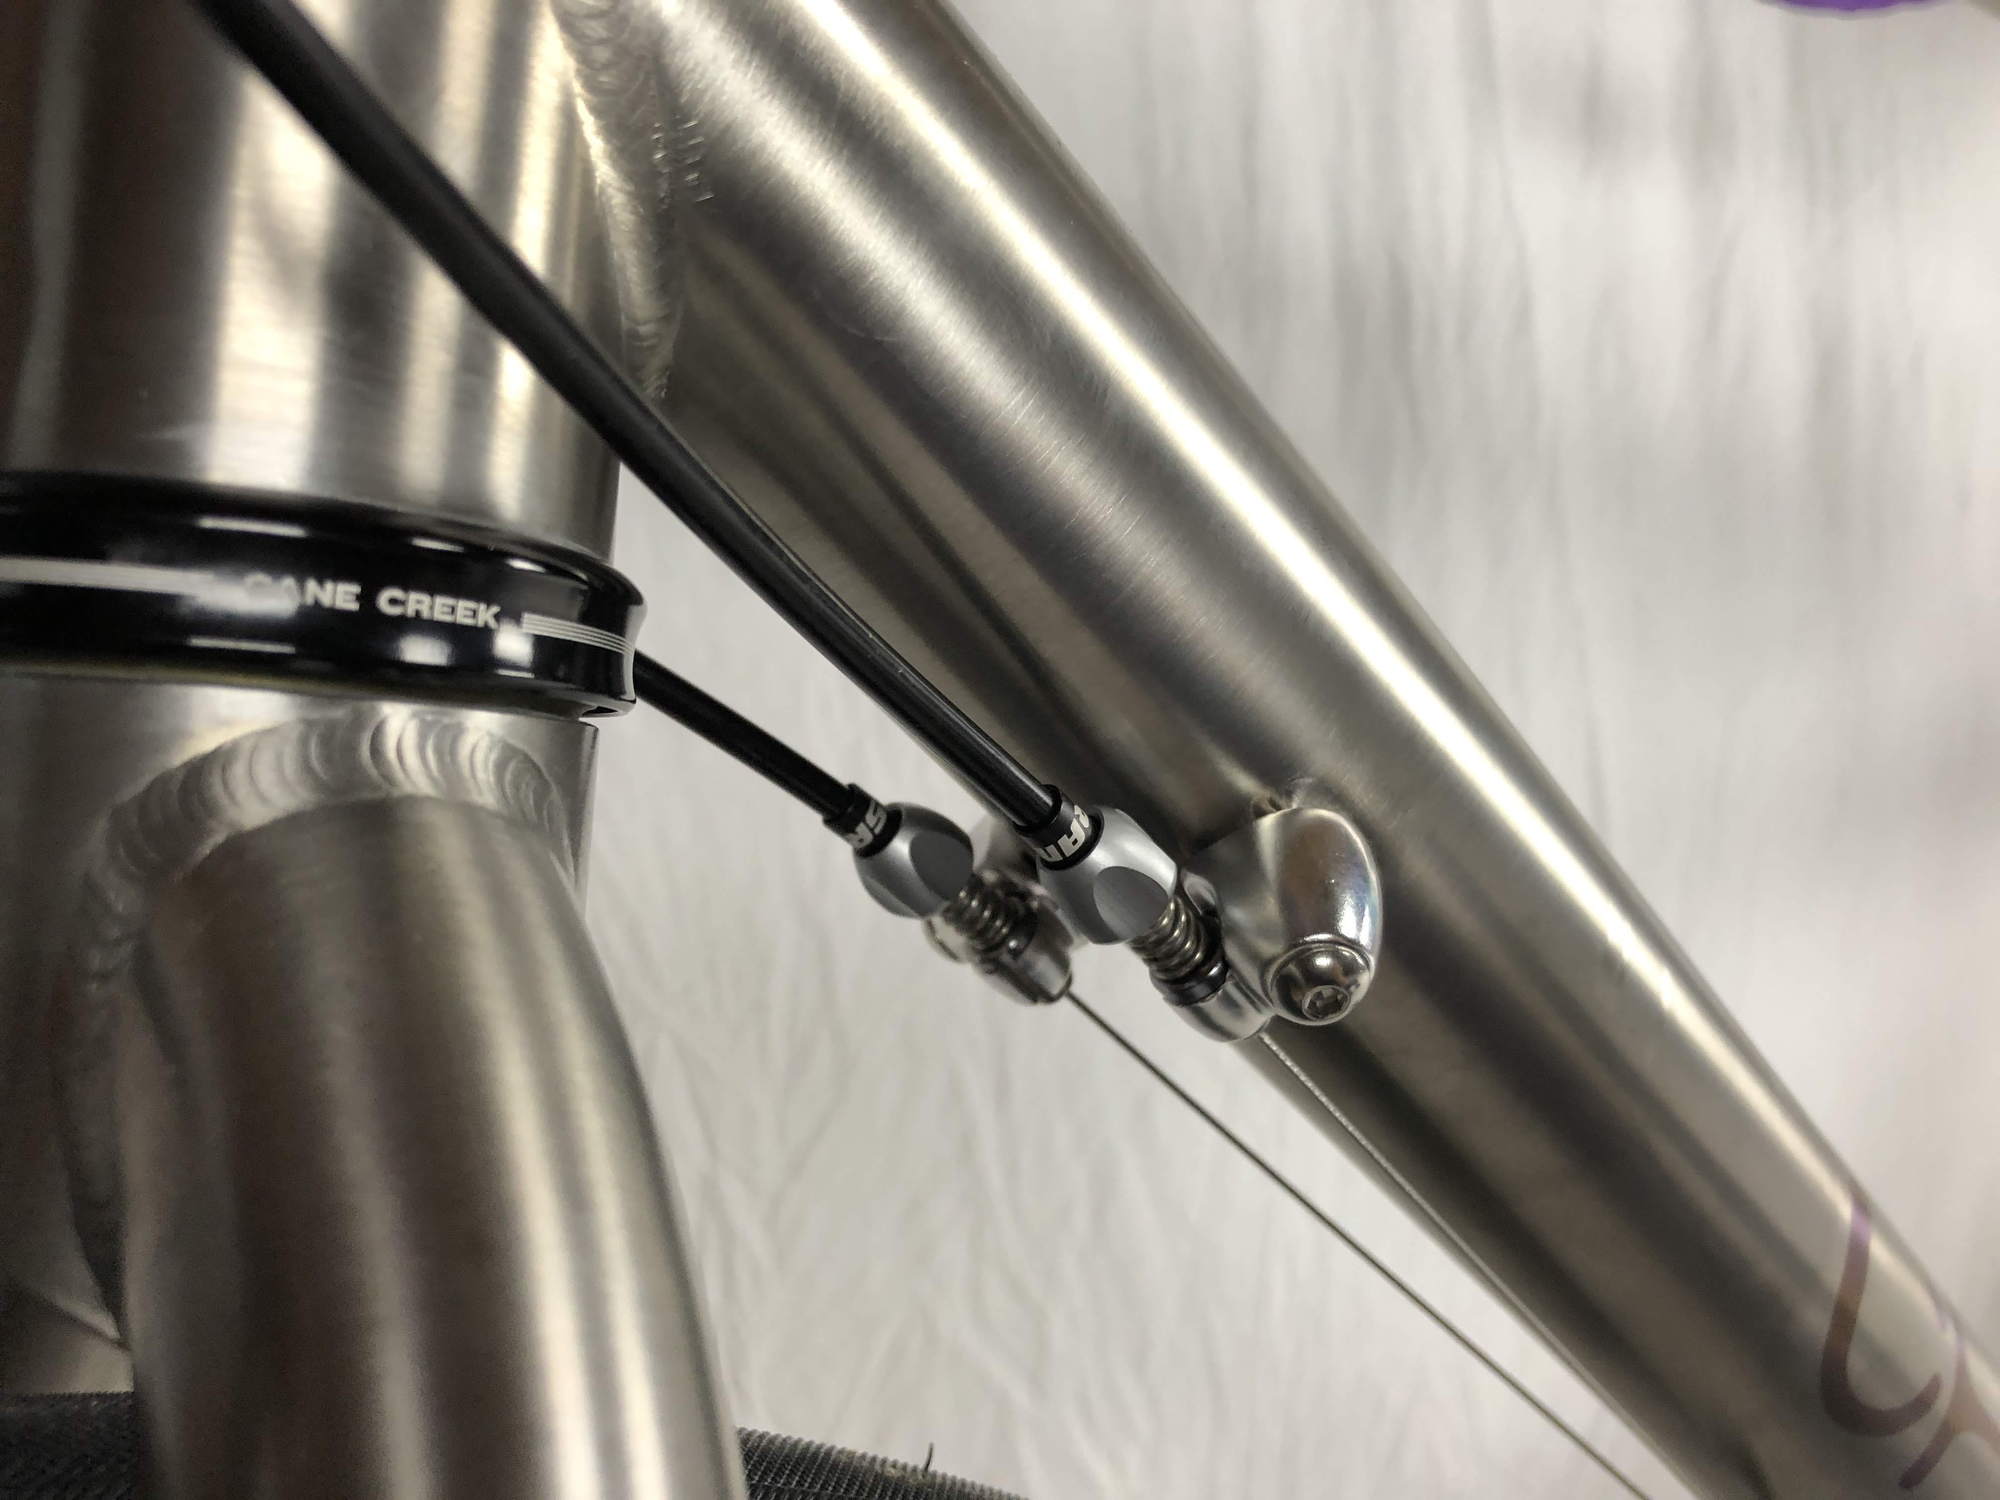 bicycle barrel adjuster